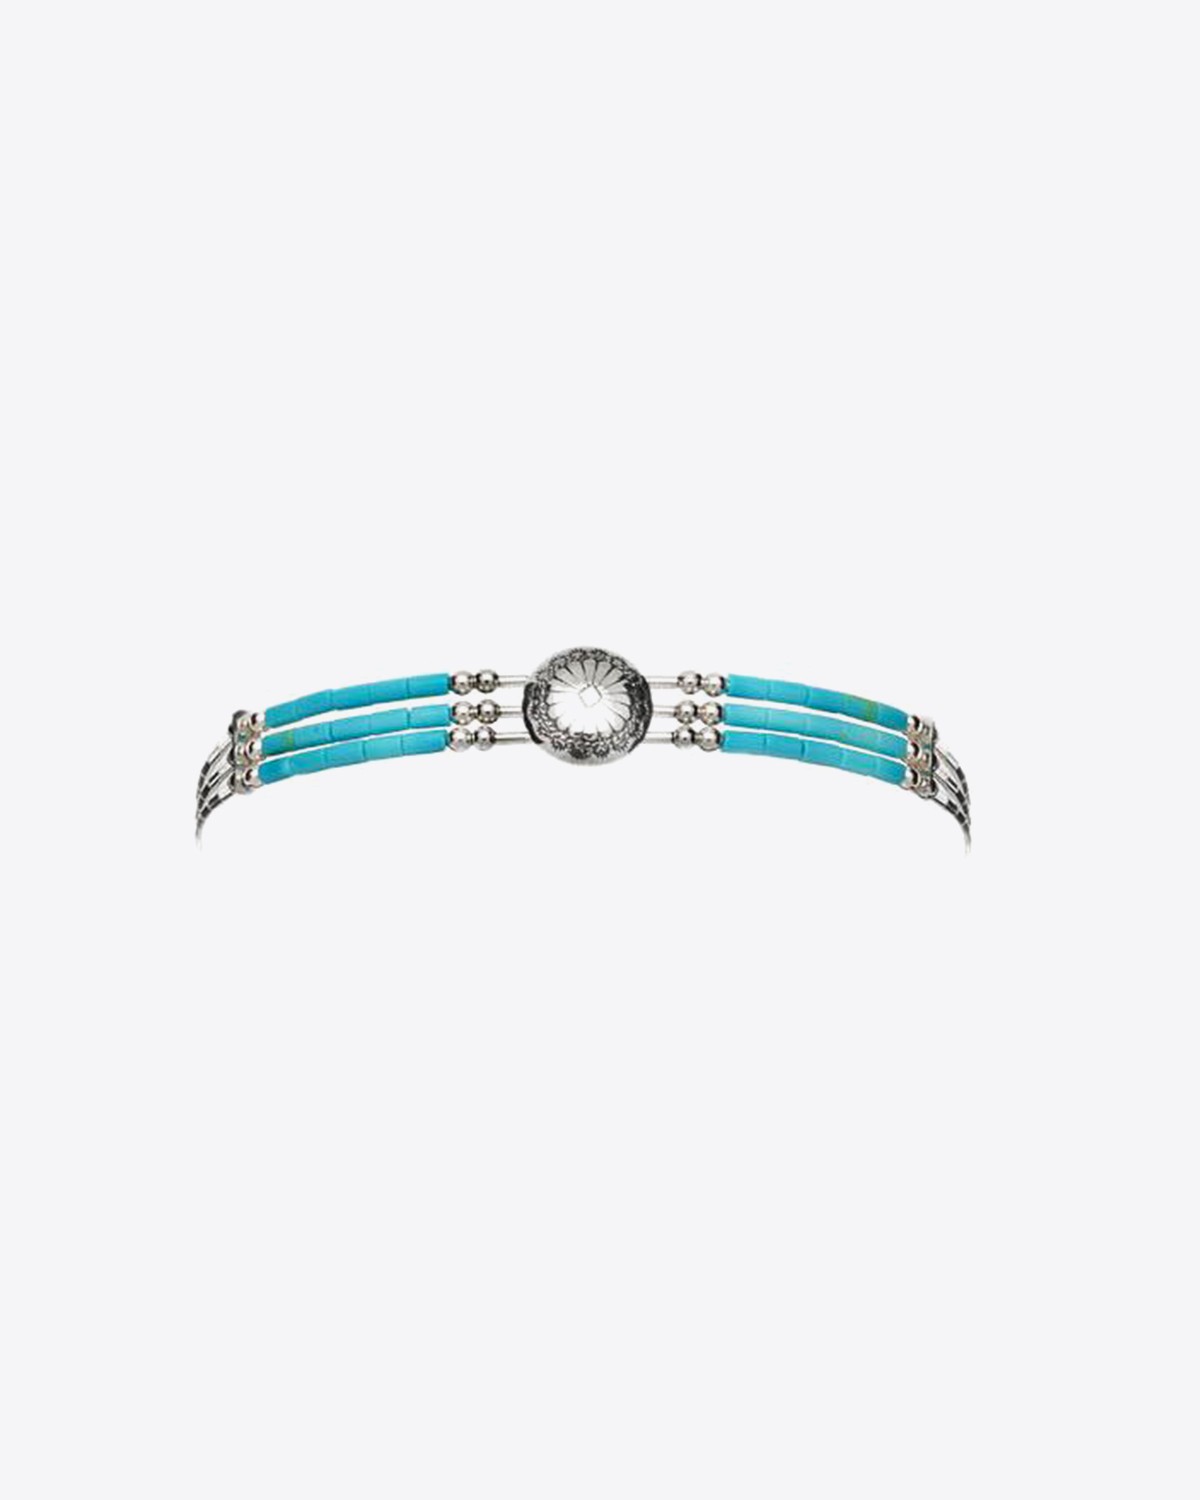 Harpo Permanent Bracelet Conchas PM Turquoise B336T 